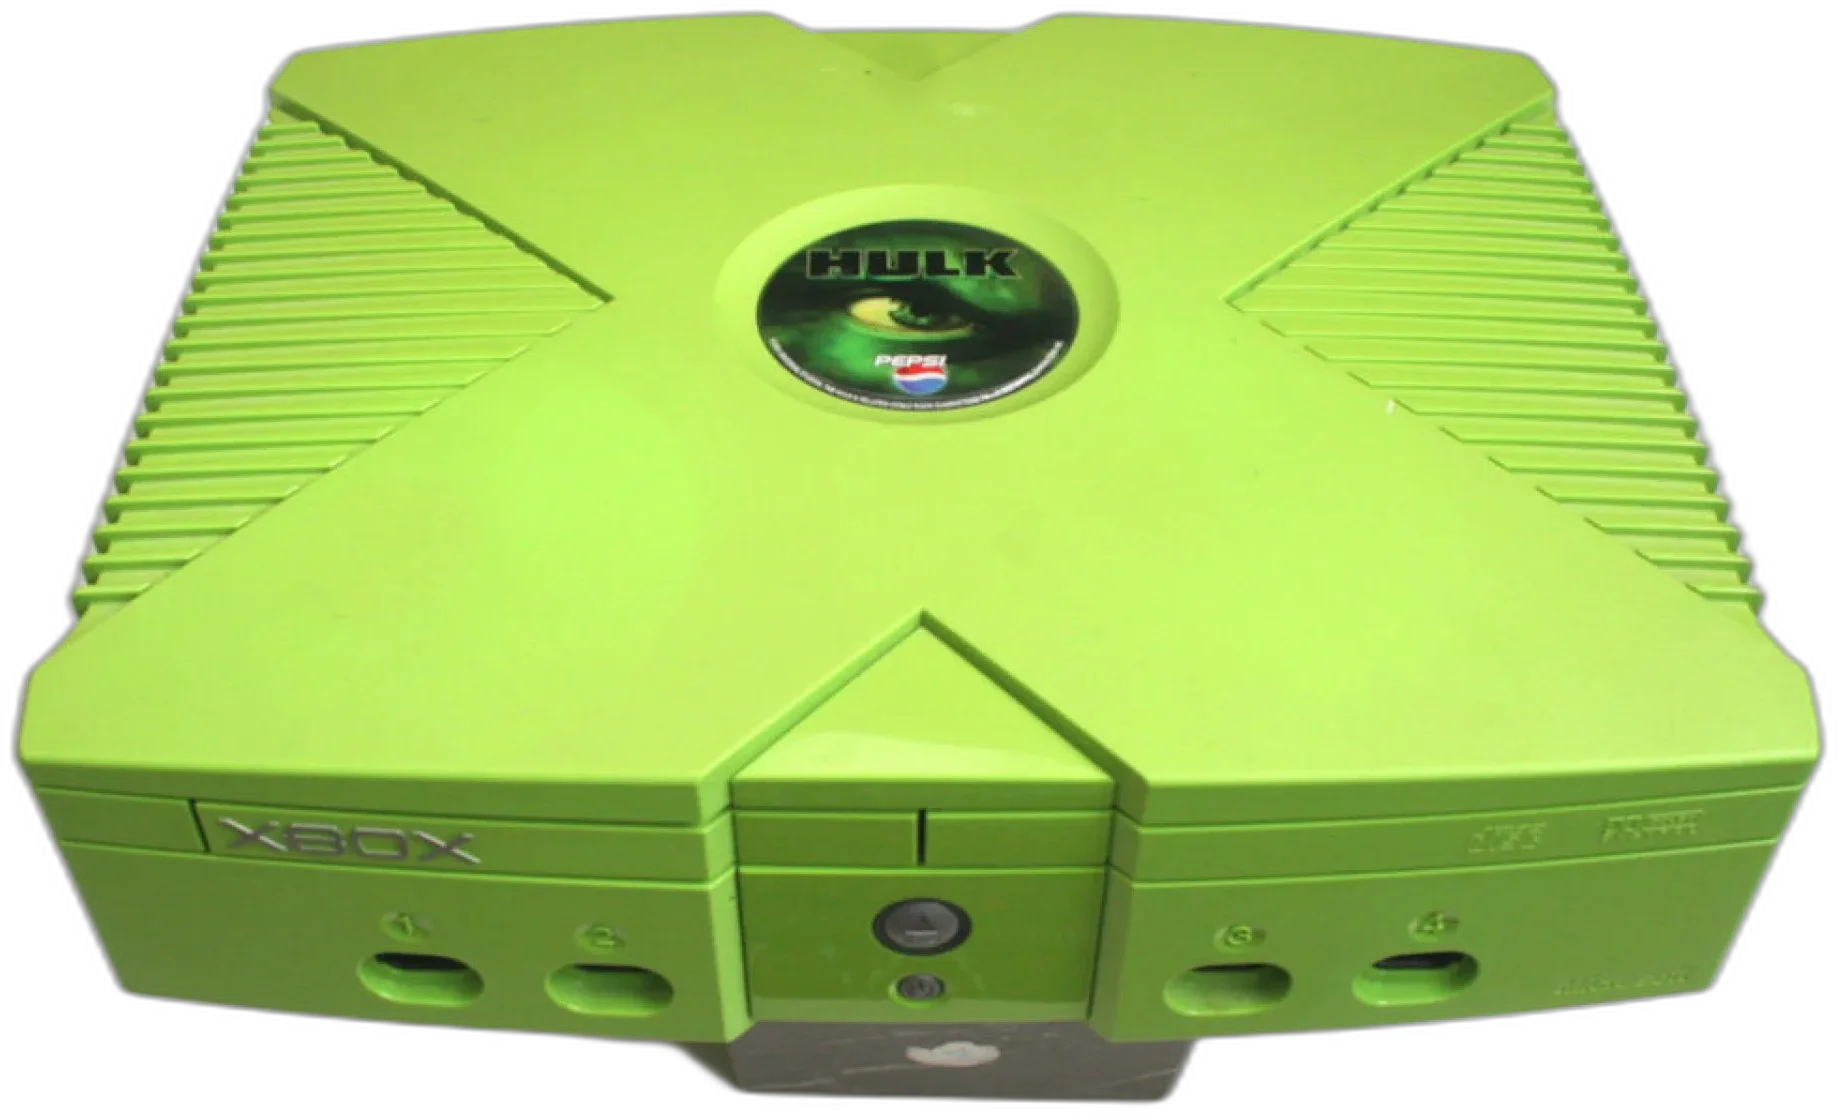 Xbox original на xbox 360. Xbox Original 2001. Xbox Original Xbox 360 Xbox one. Xbox Original Limited Edition. Xbox Original 2003.